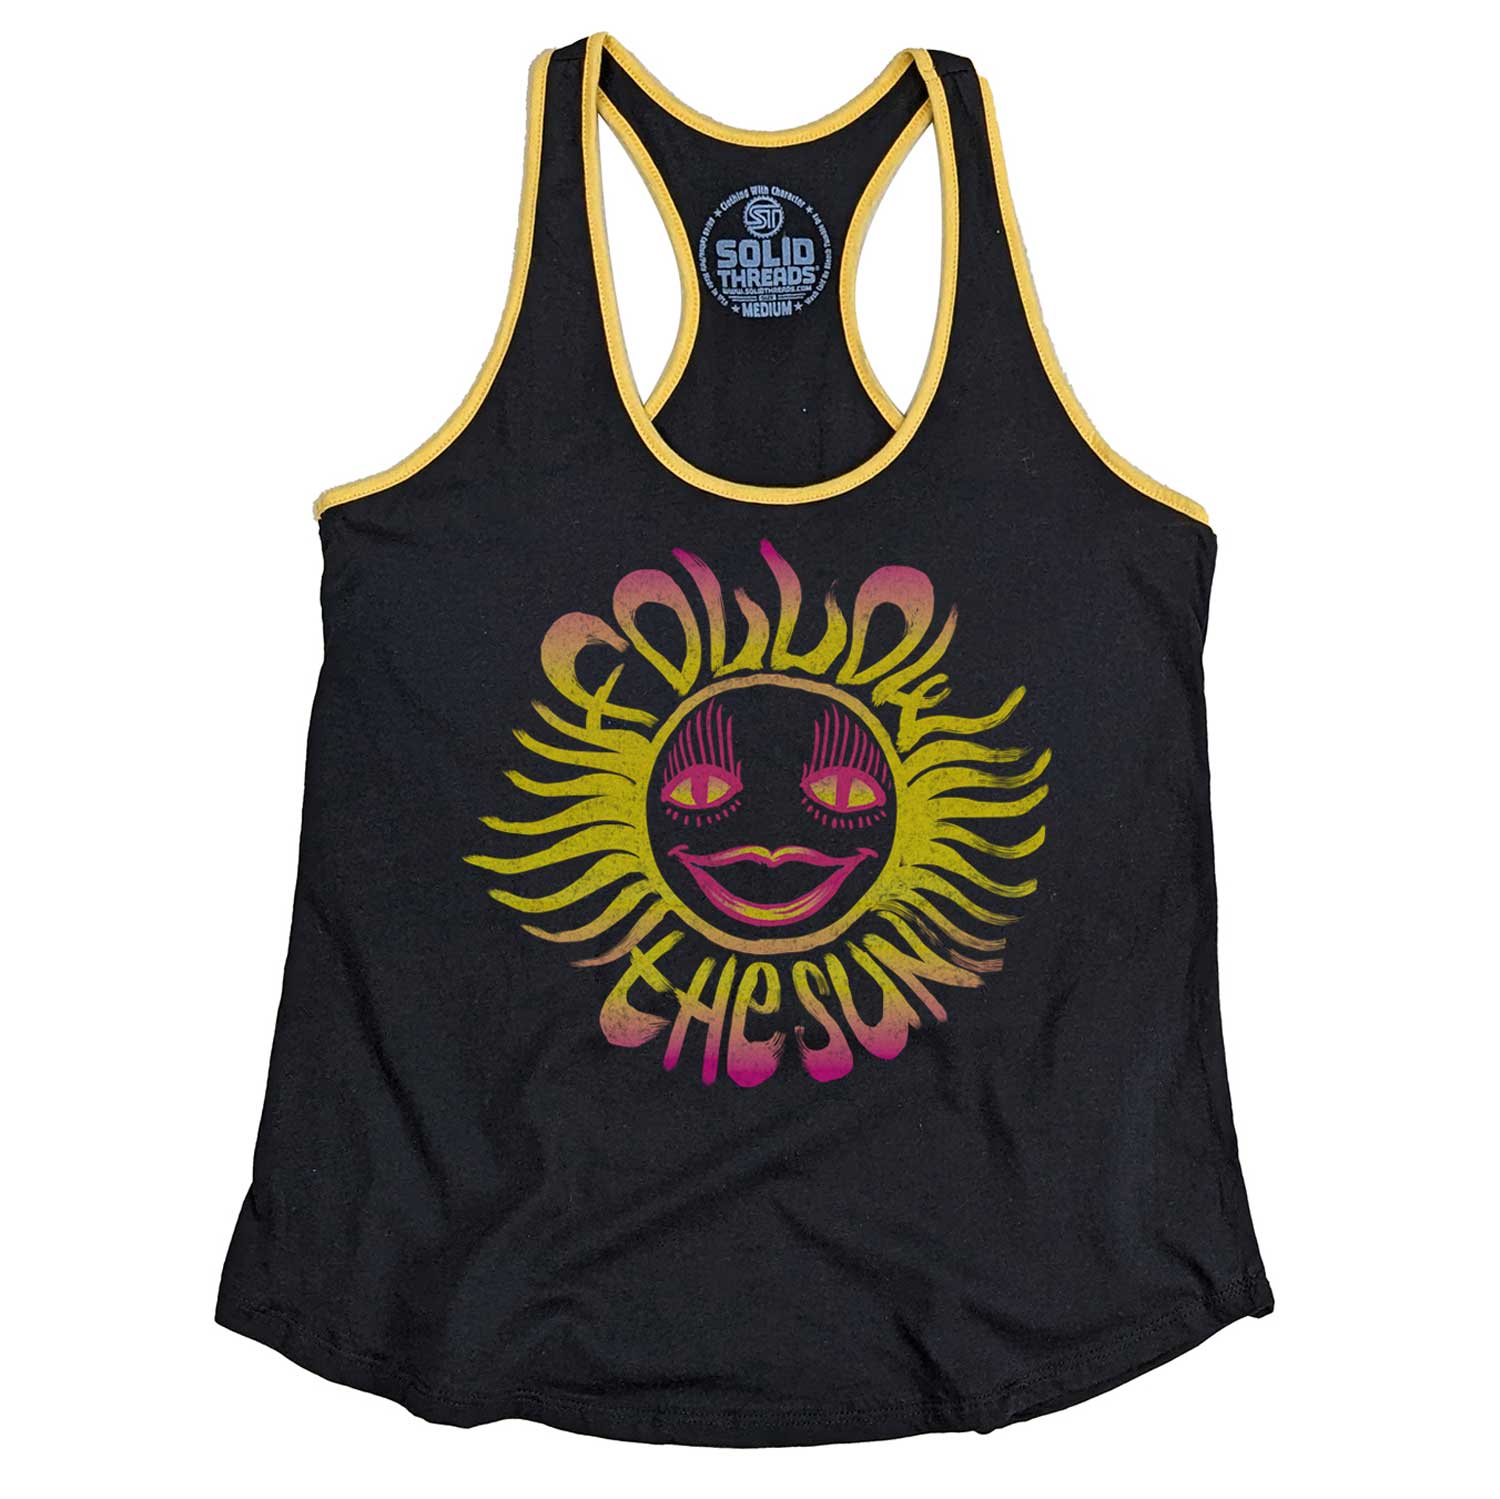 Women's Follow the Sun Vintage Graphic Tank Top | Retro Beach T-shirt | Solid Threads